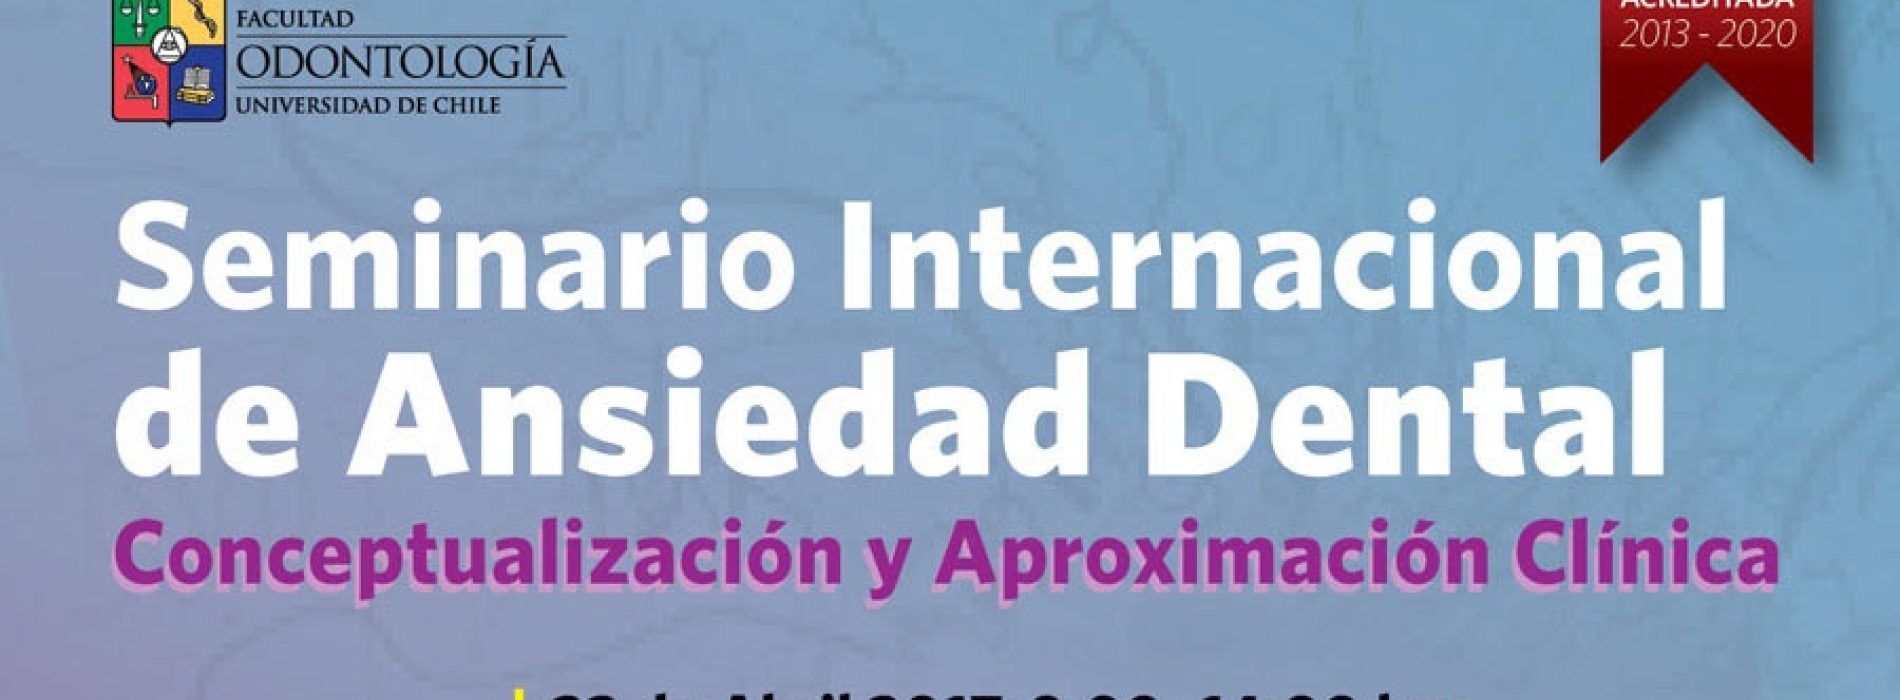 April 22, 2017: international seminar on Dental anxiety. U. de Chile